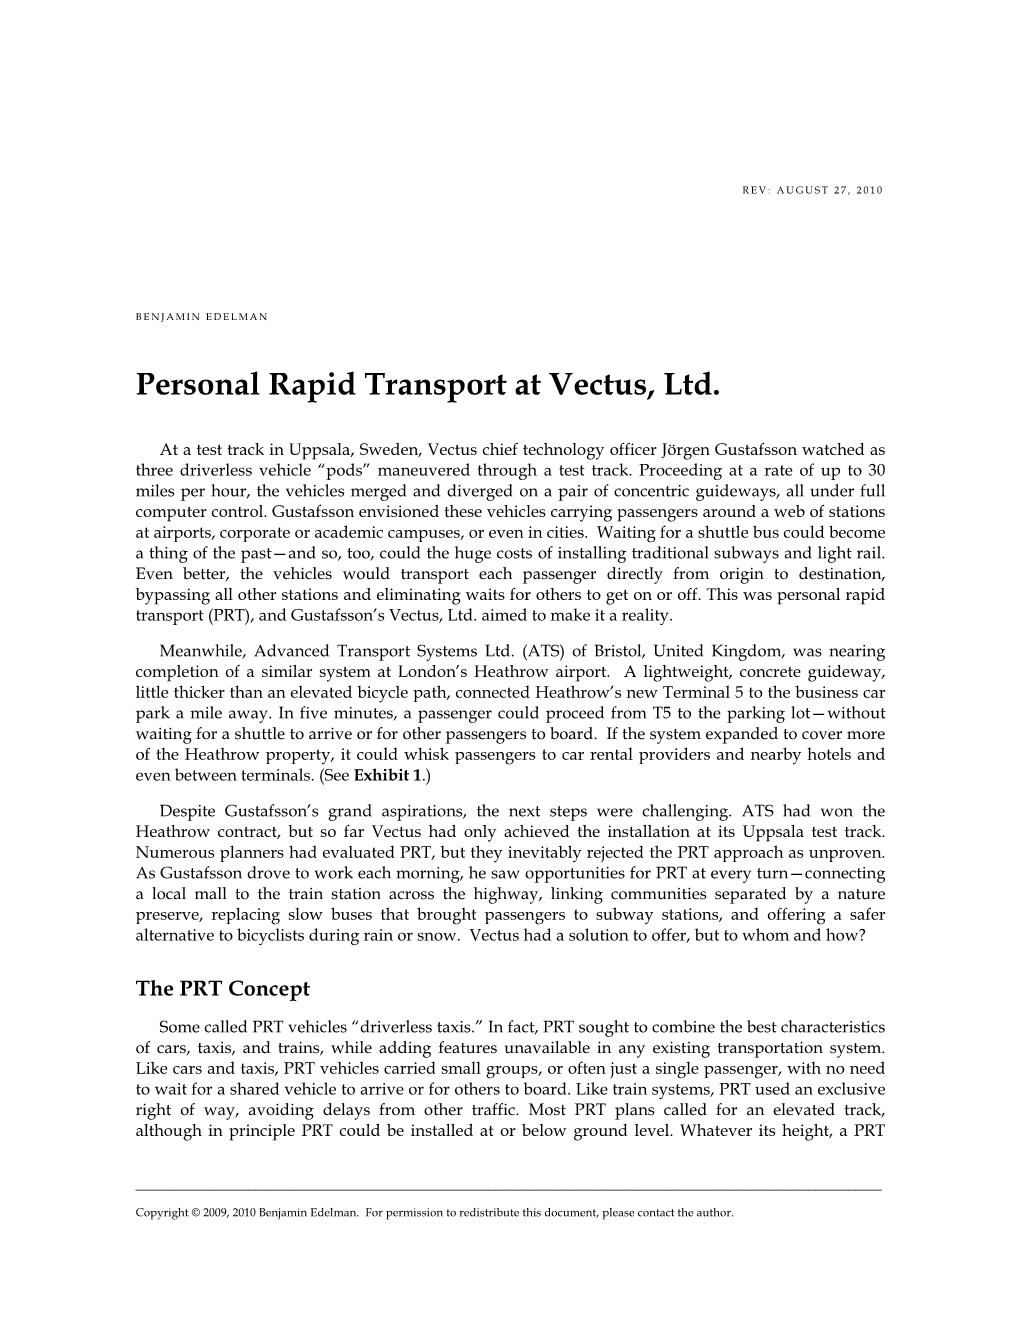 Personal Rapid Transport at Vectus, Ltd